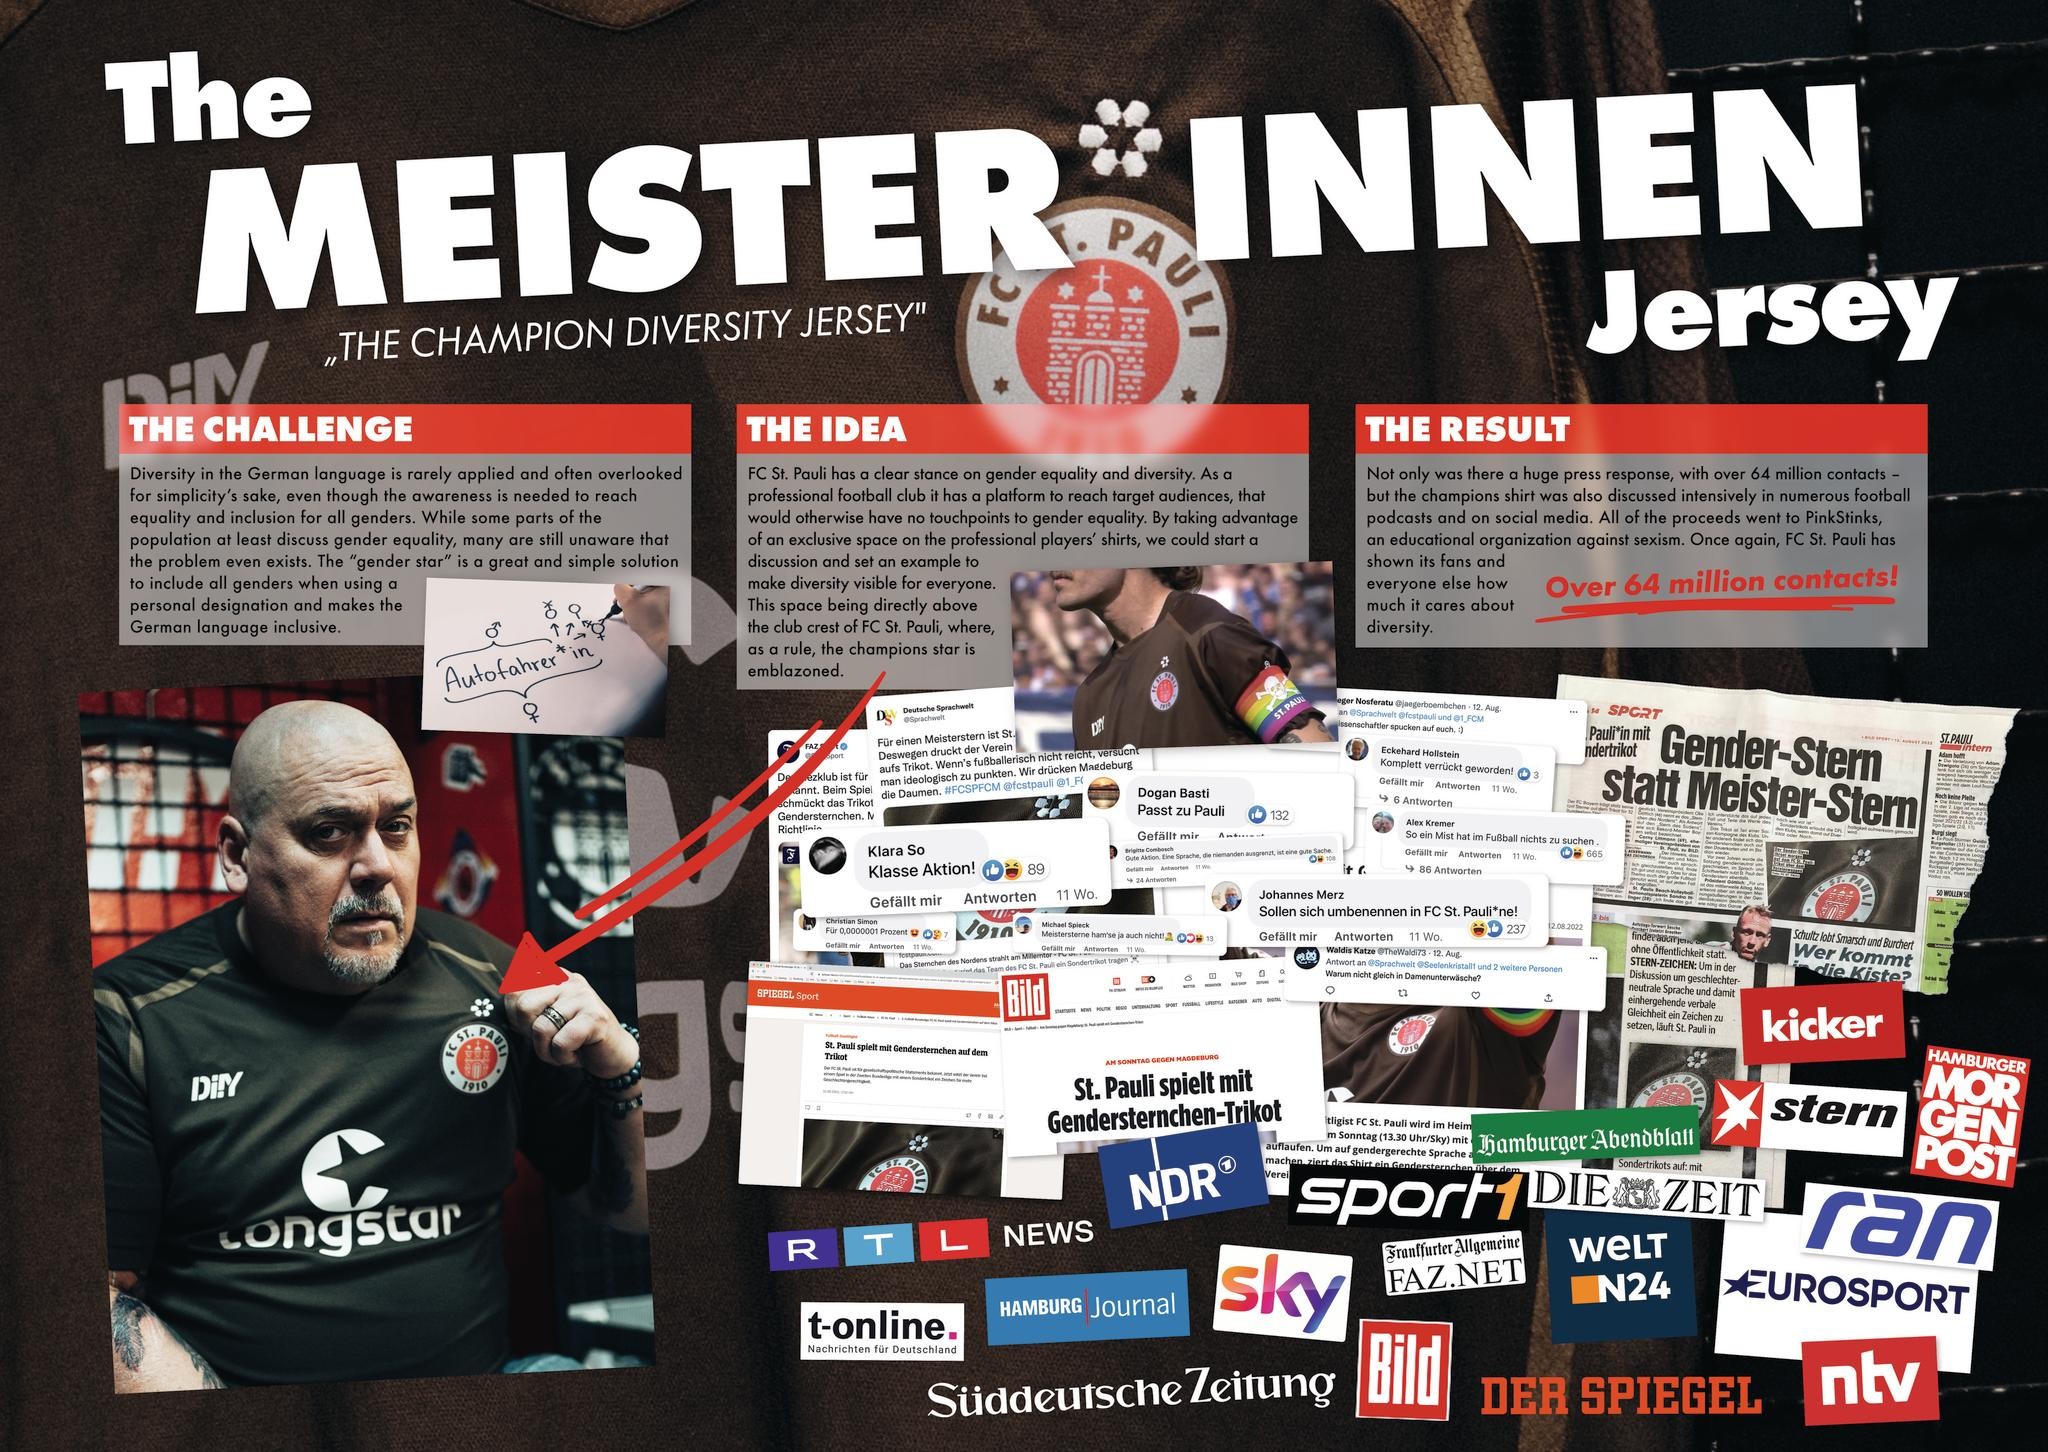 “The Meister*innen-Jersey"